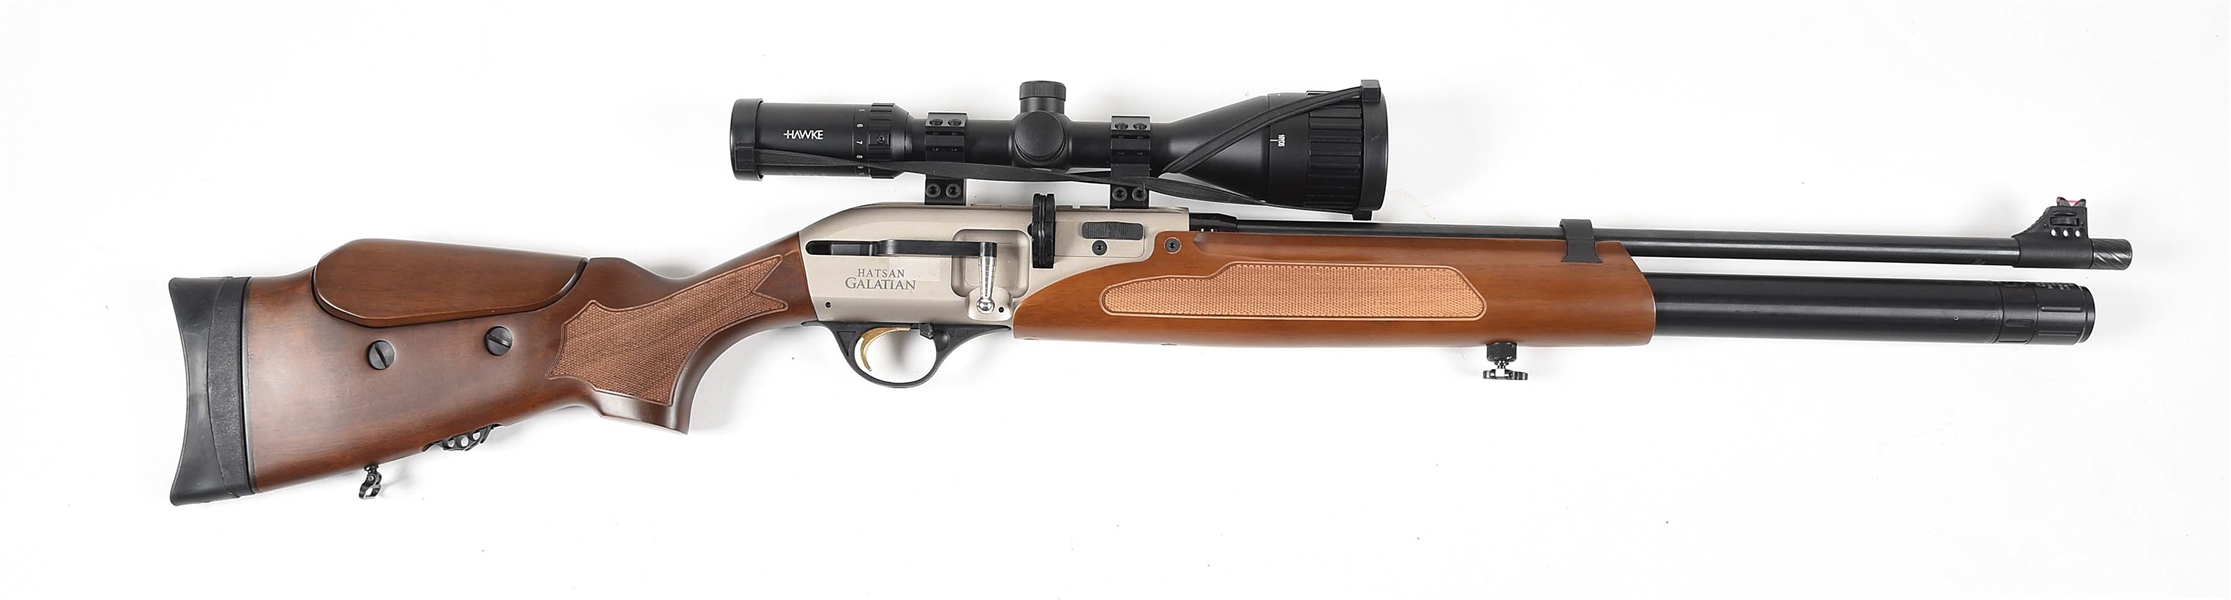 Hatsan Galatian air rifle with Hawke scope made in Turkey | Barnebys